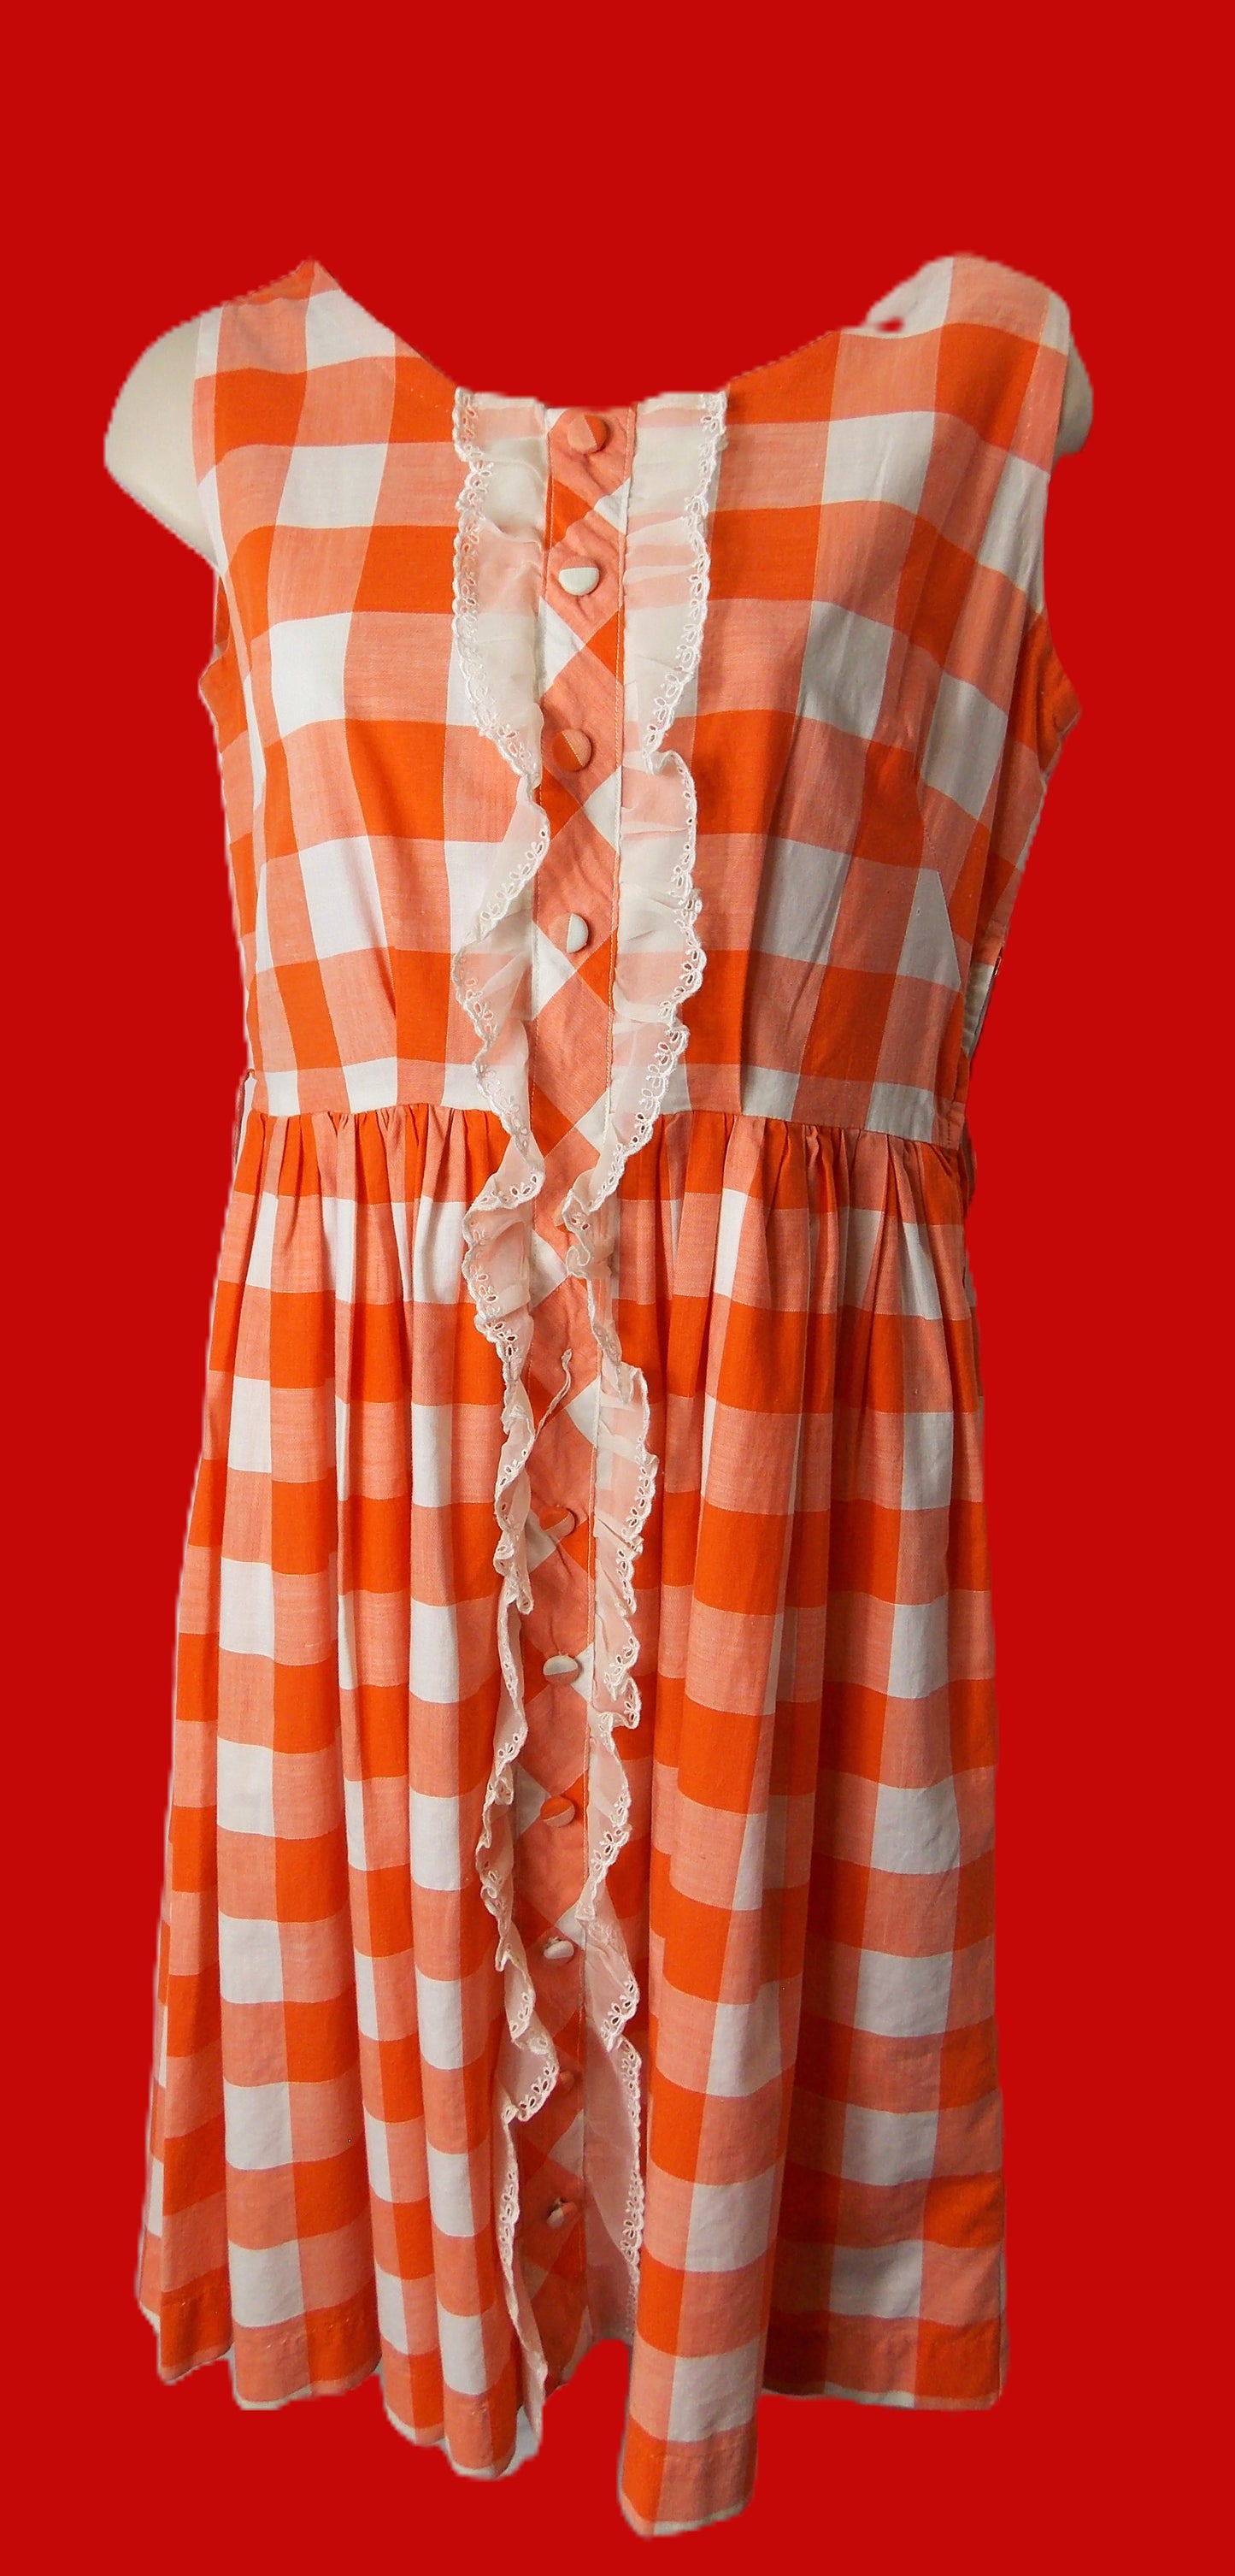 Vintage sleeveless Apron dress.